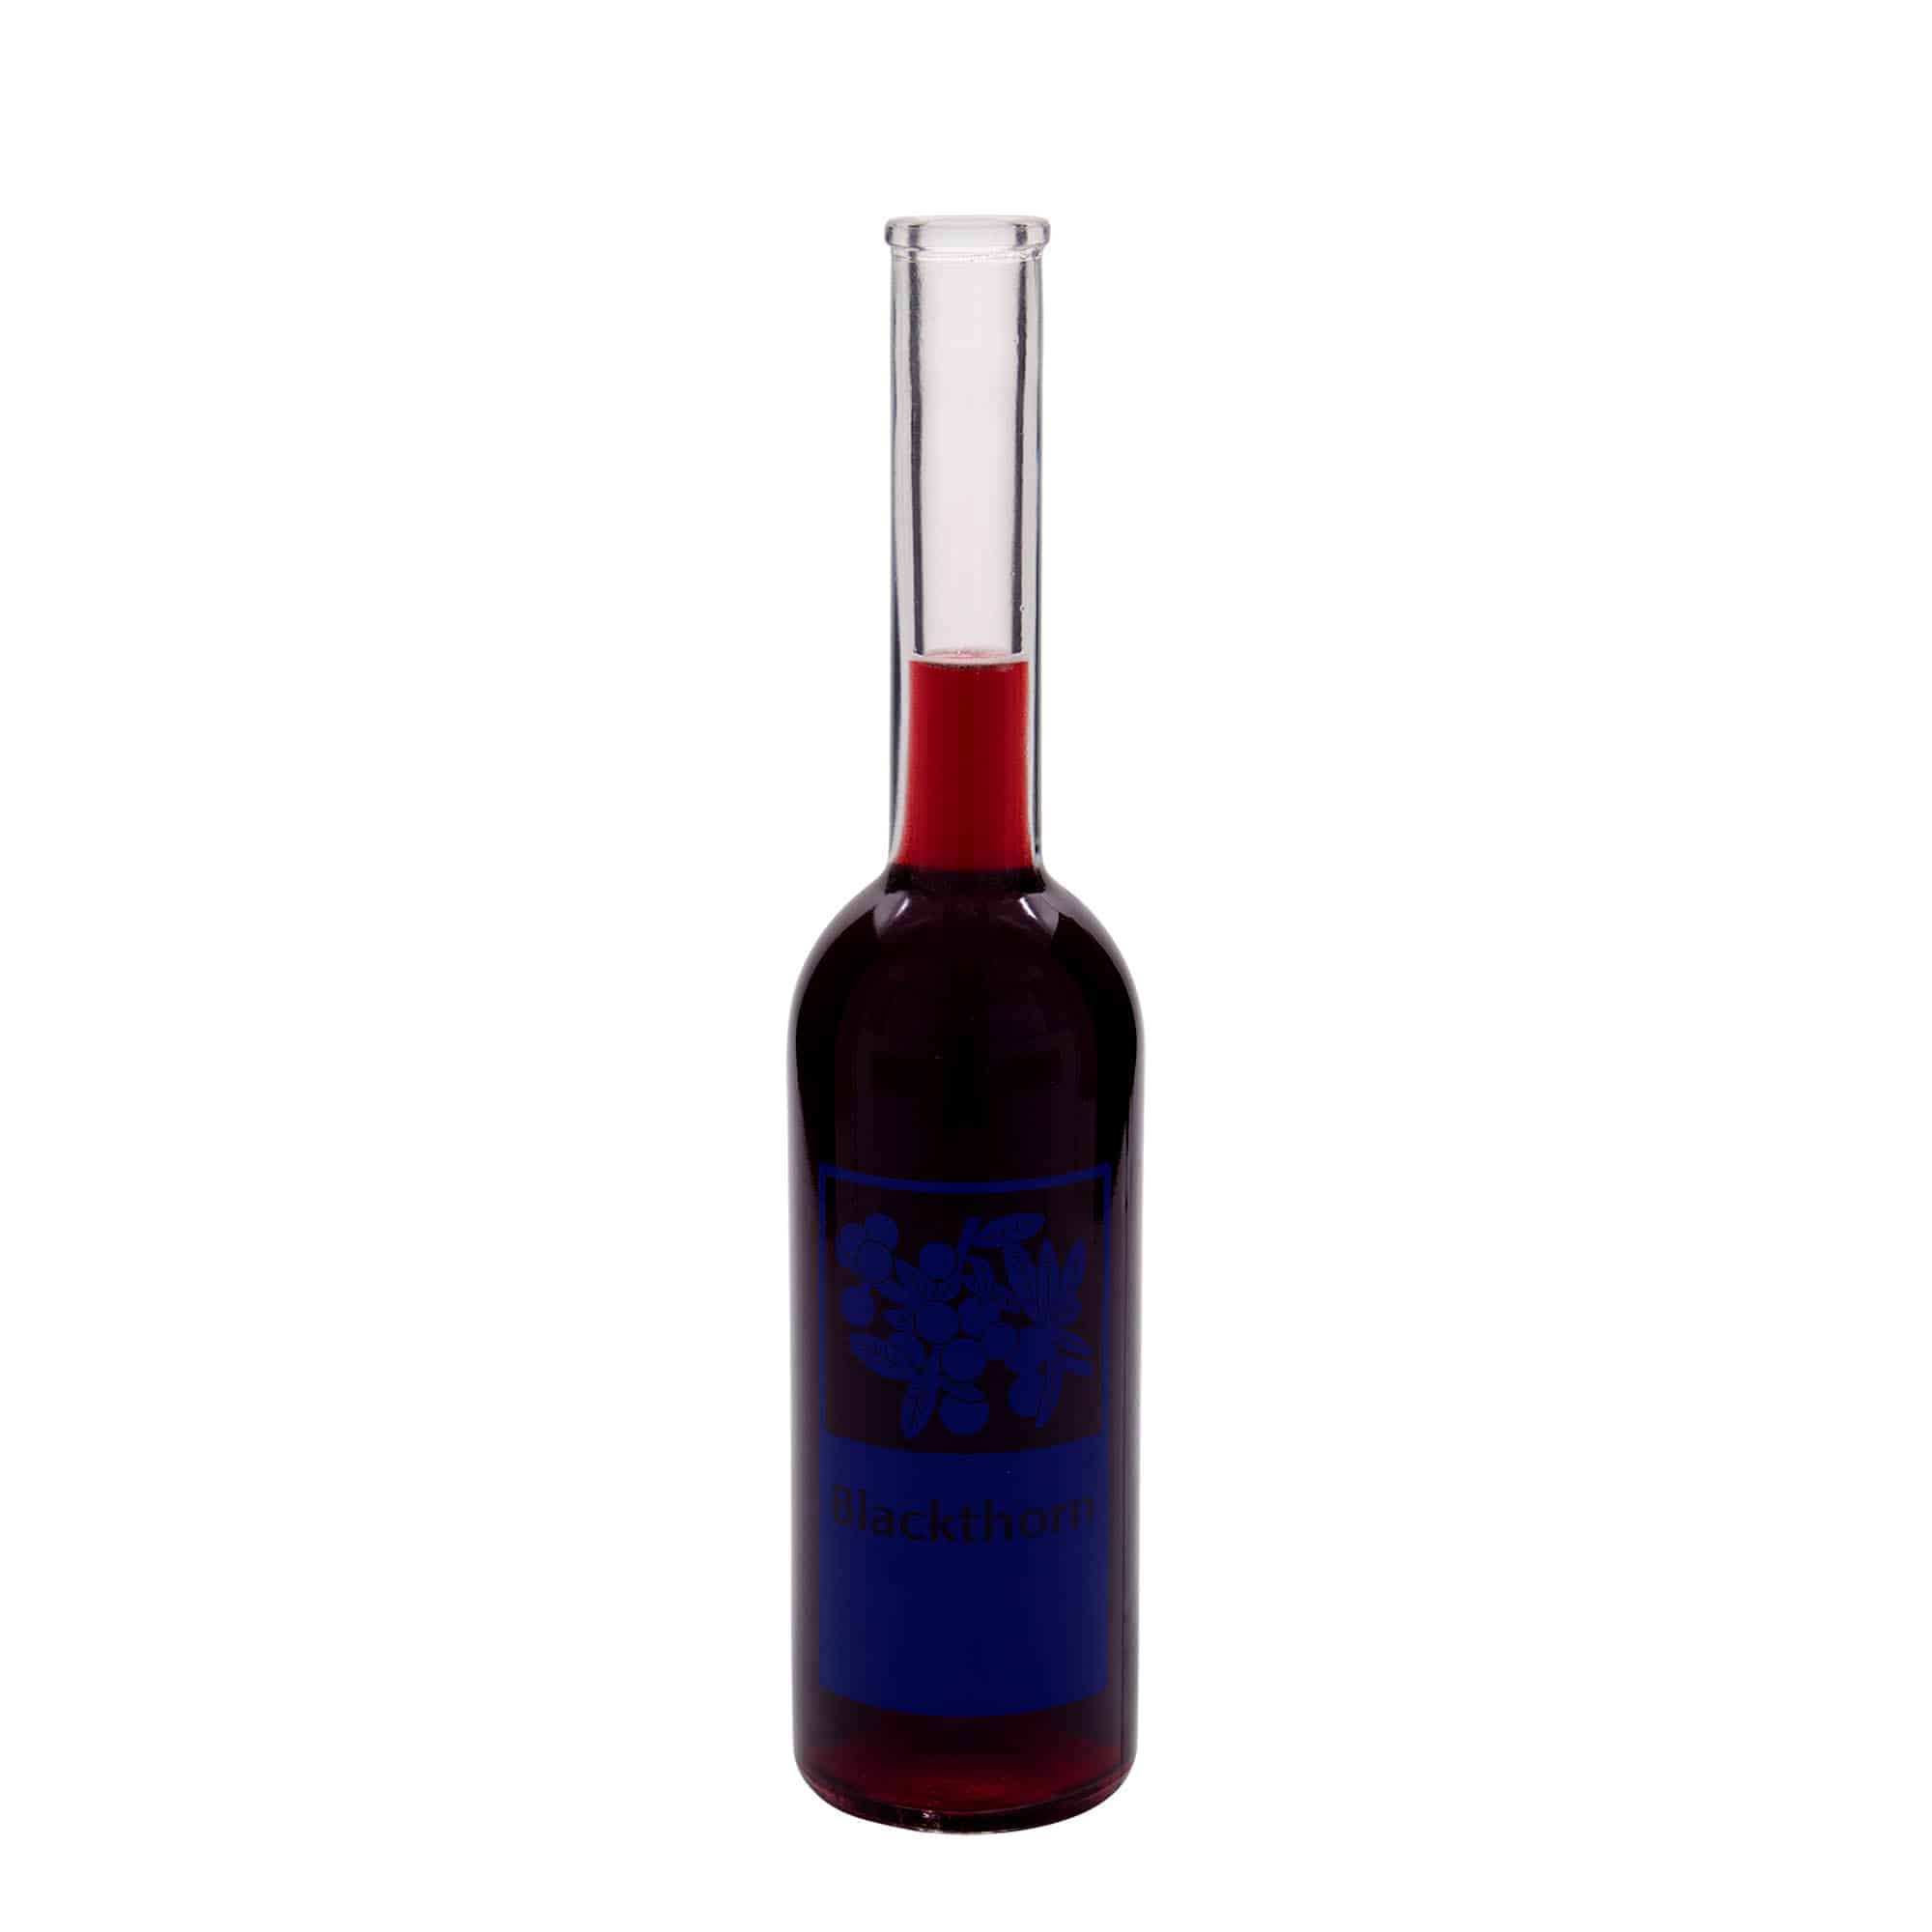 500 ml glass bottle 'Opera', print: Blackthorn, closure: cork